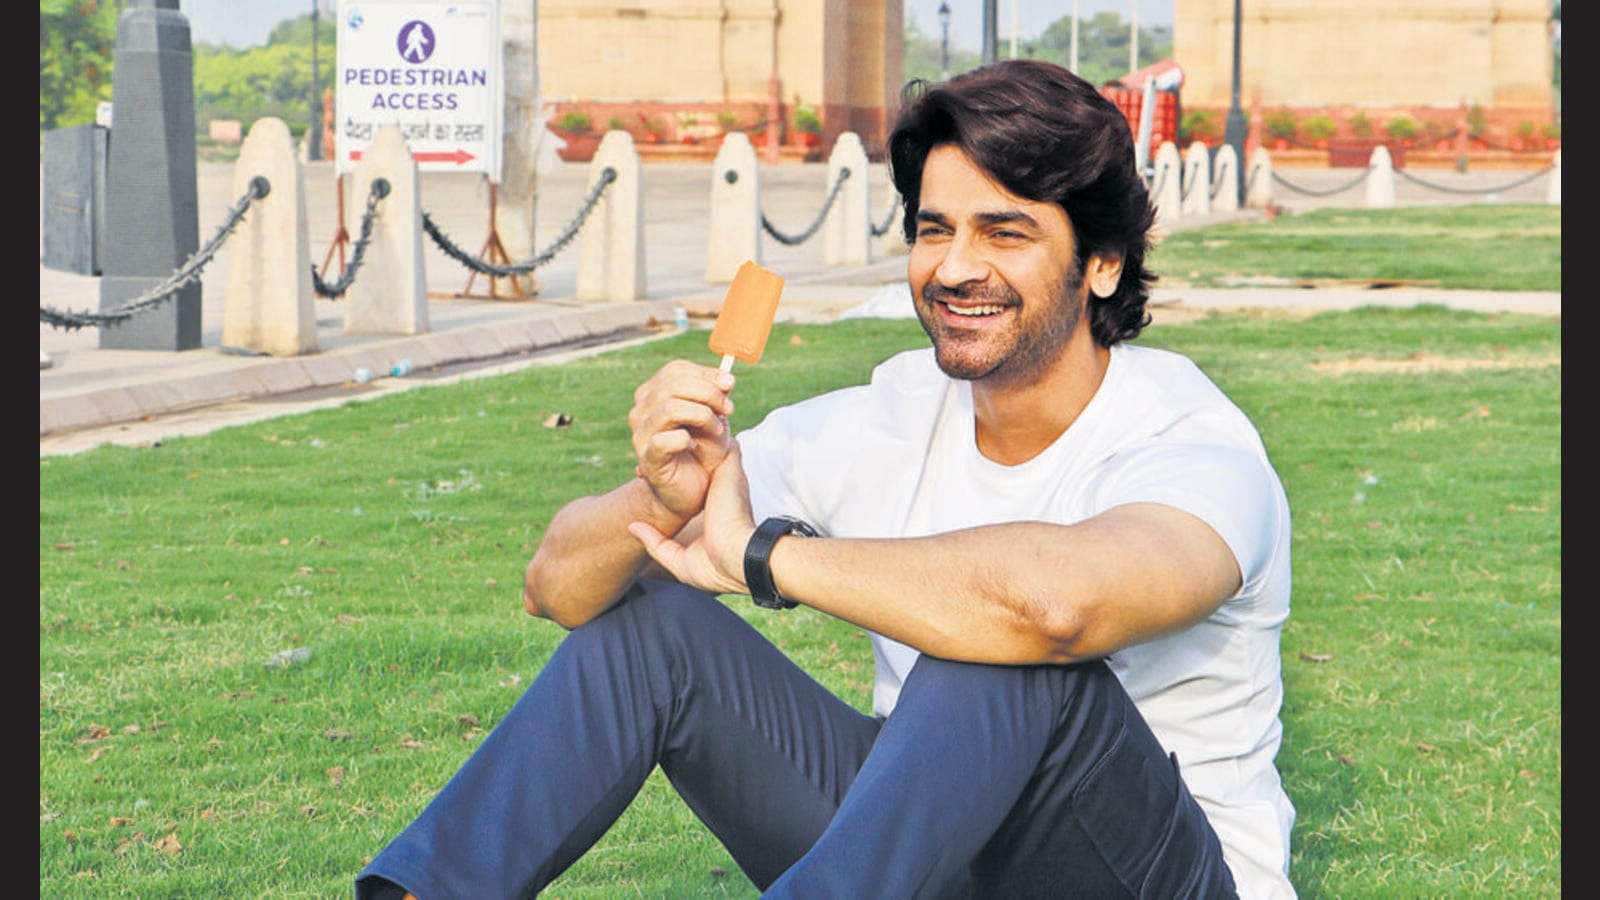 Arjan Bajwa: I used to look forward to having ice cream at India Gate